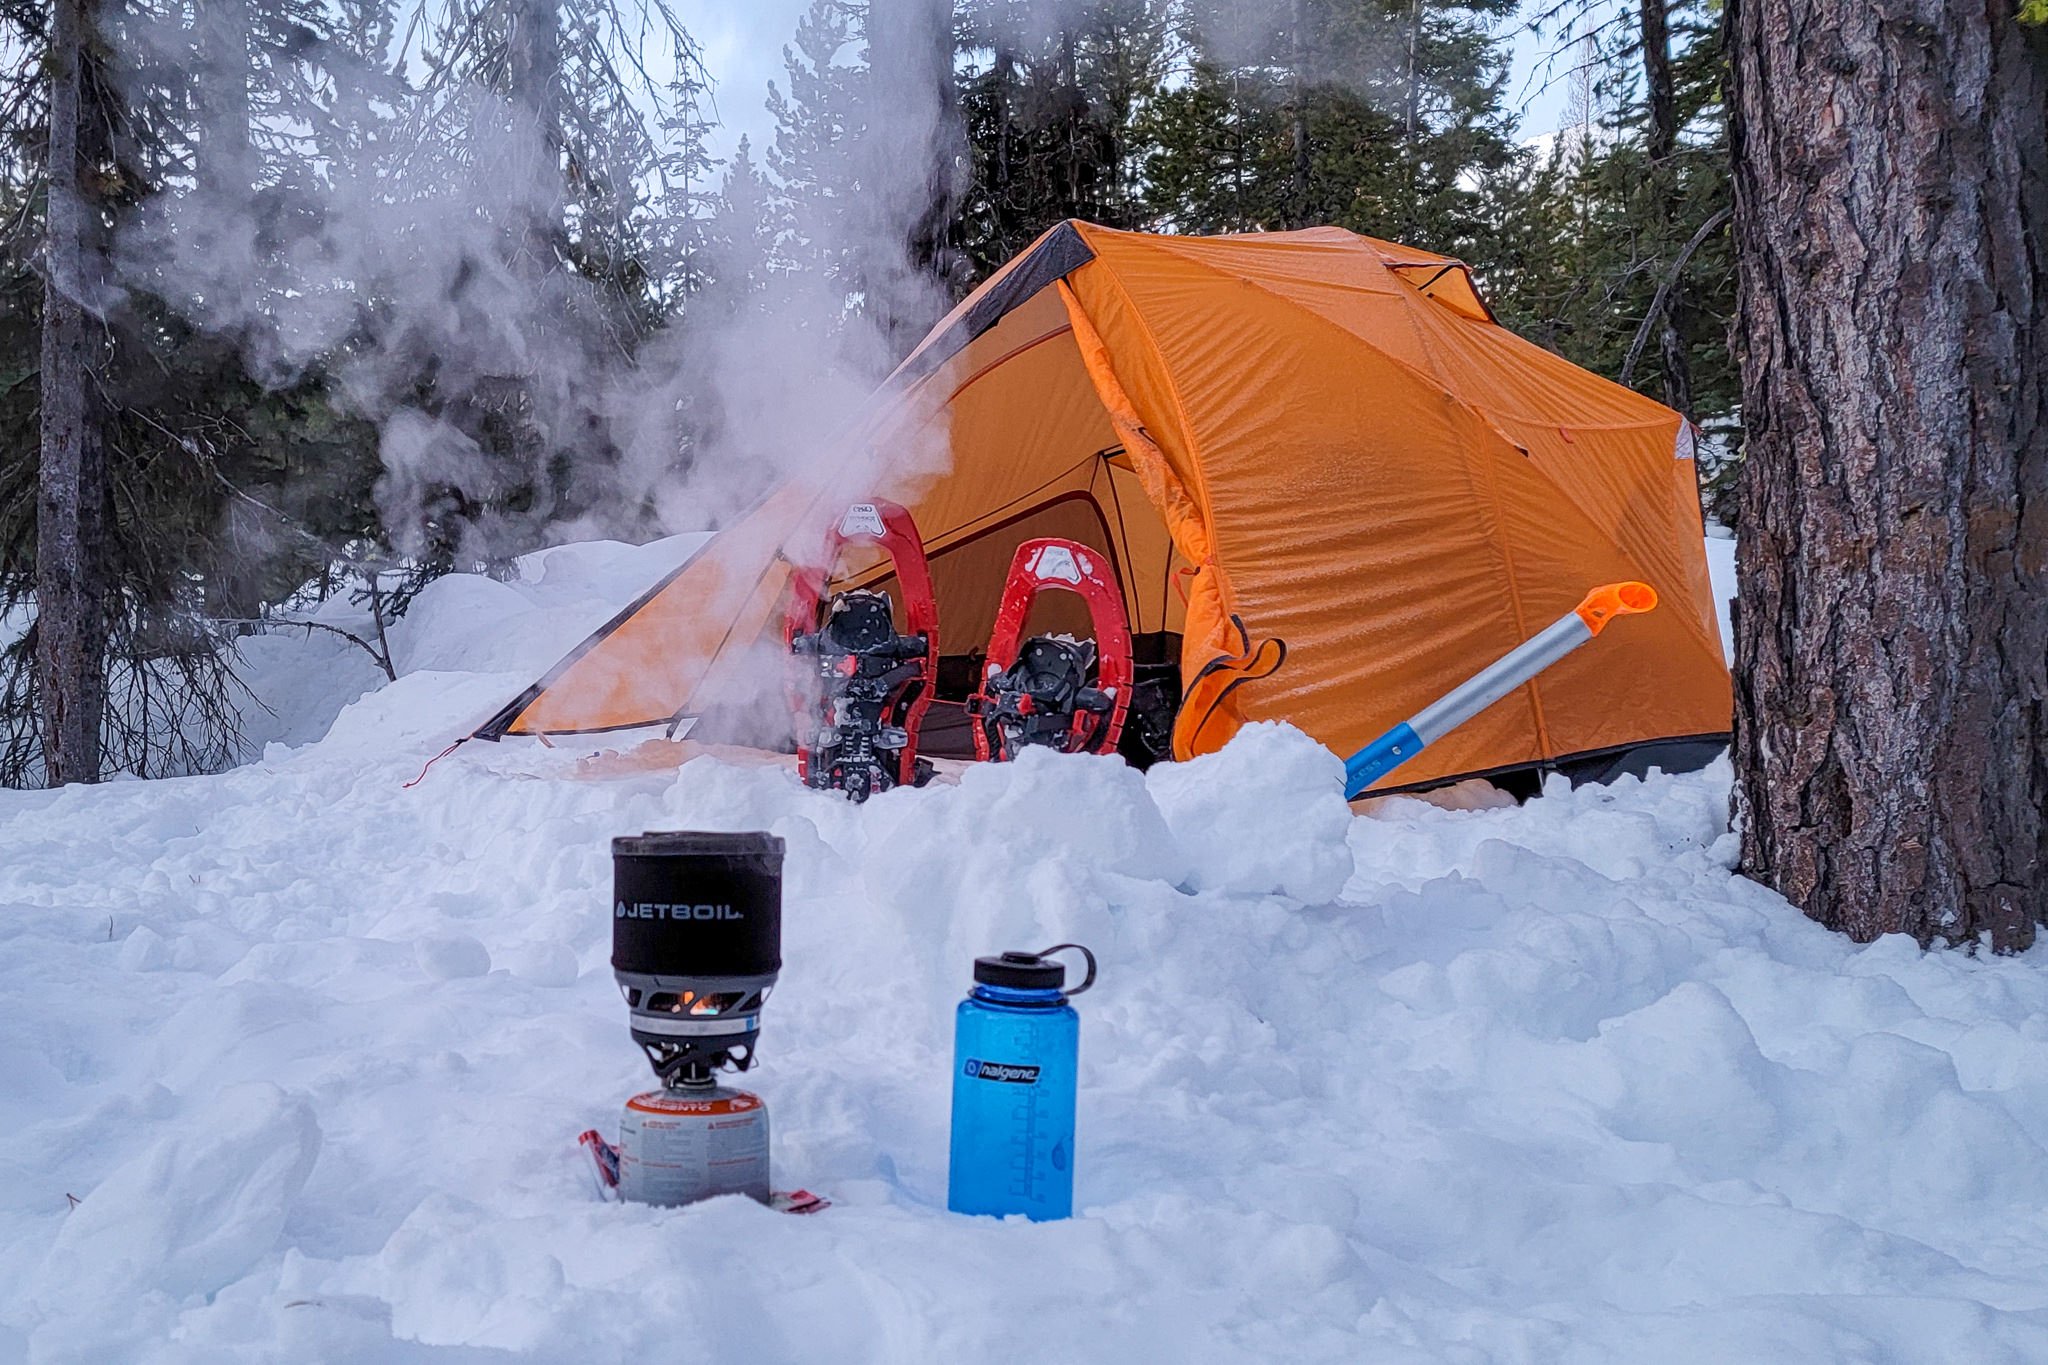 The NEMO Kunai 2 set up in a snowy winter campsite